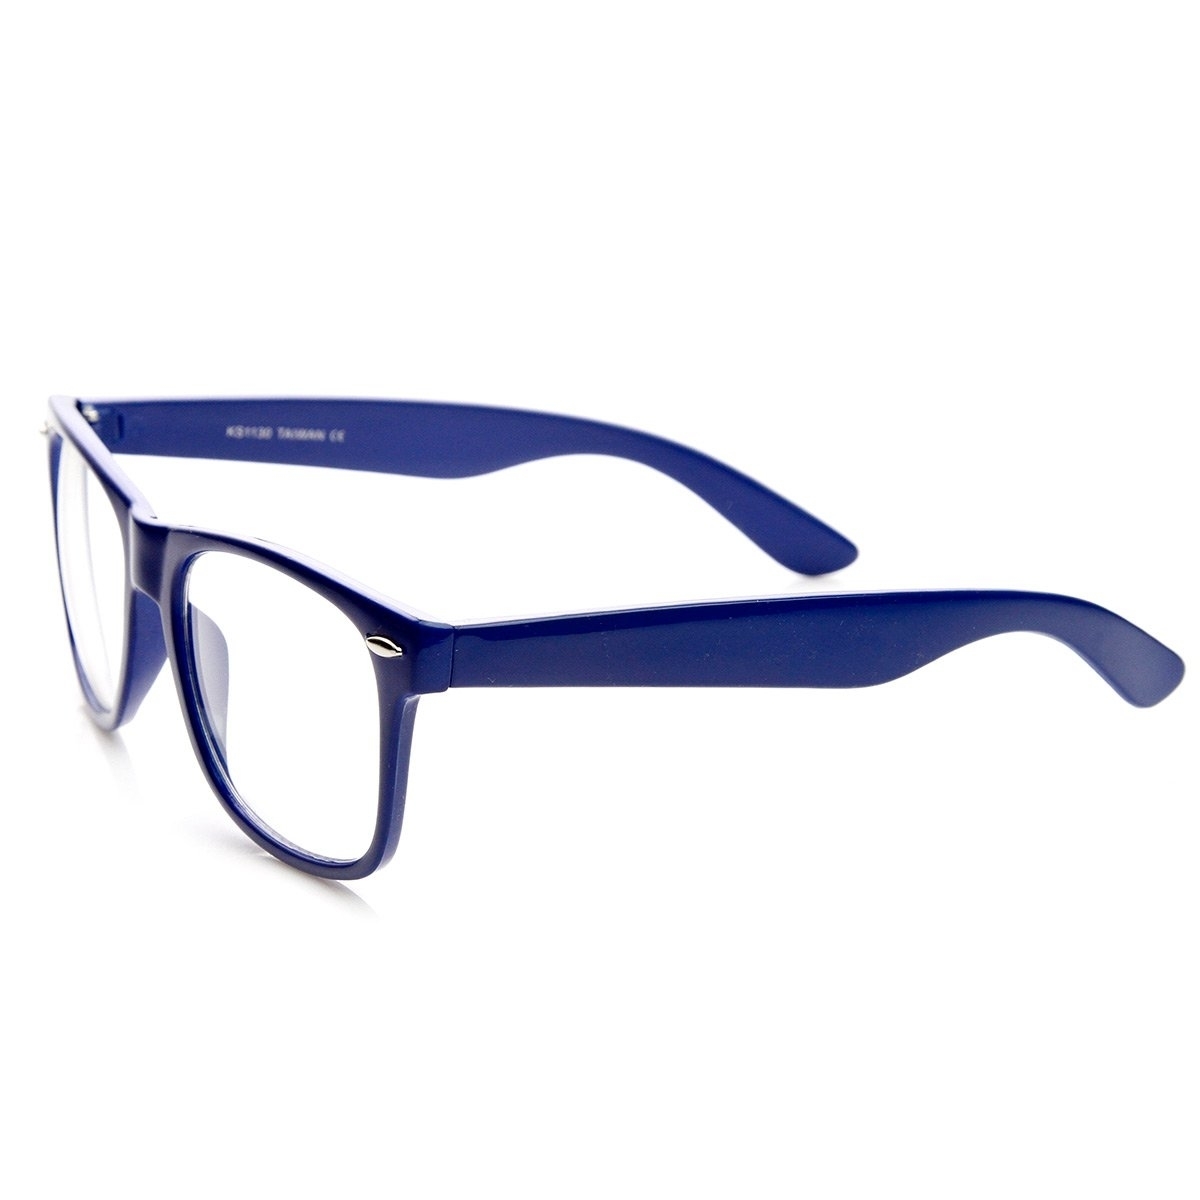 Retro Party Super Neon Color Horn Rimmed Style Eyeglasses Clear Lens Glasses - Black